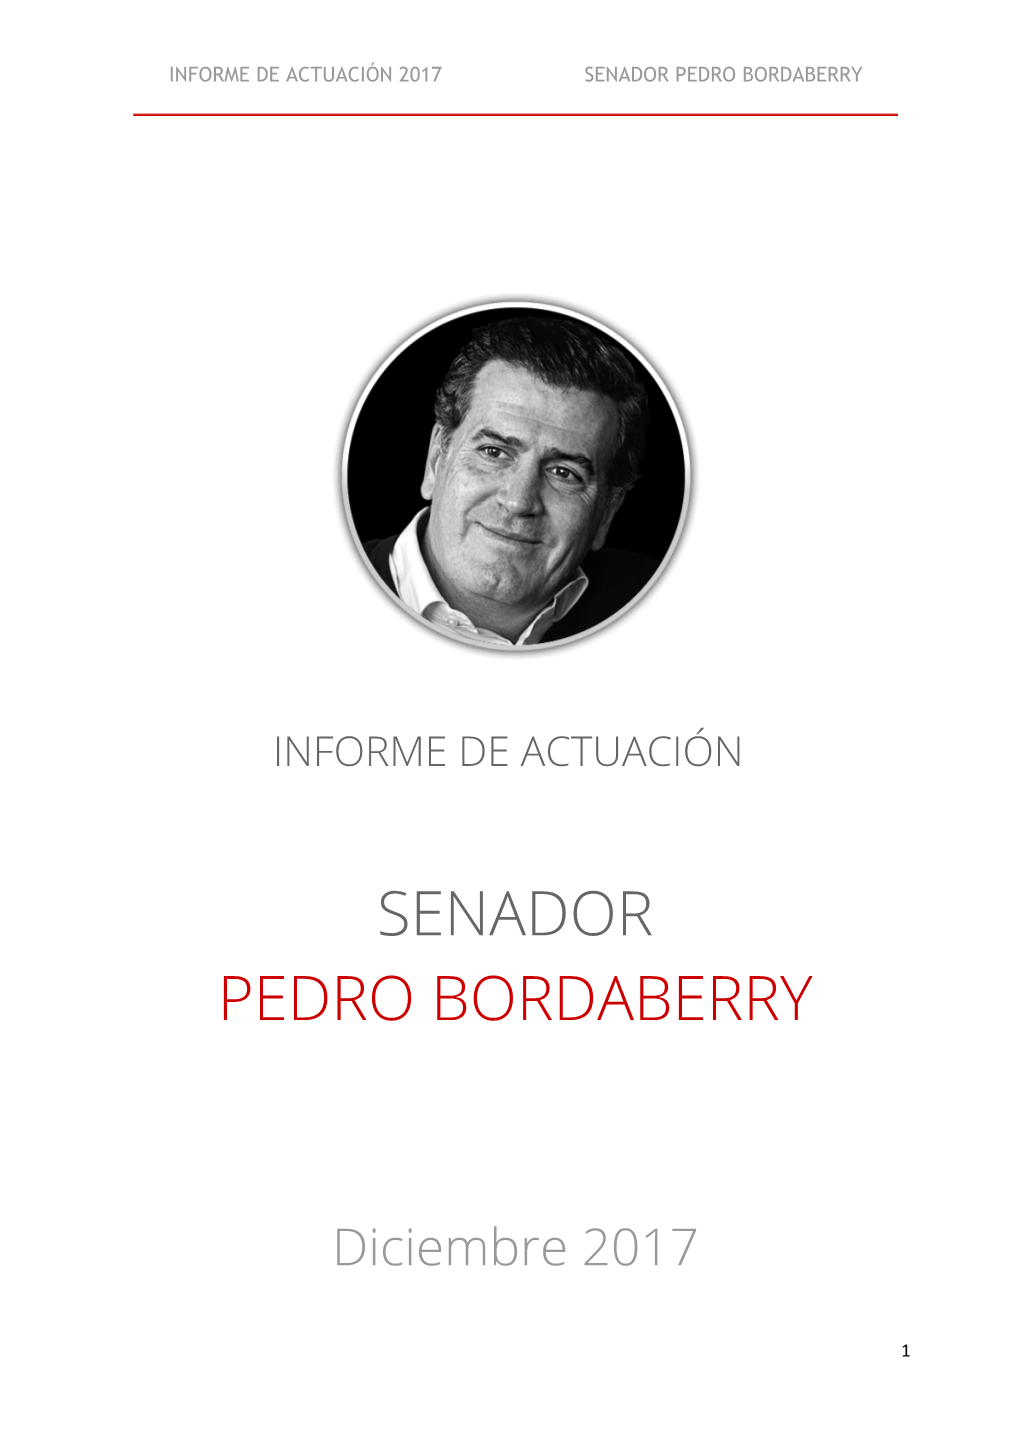 Senador Pedro Bordaberry